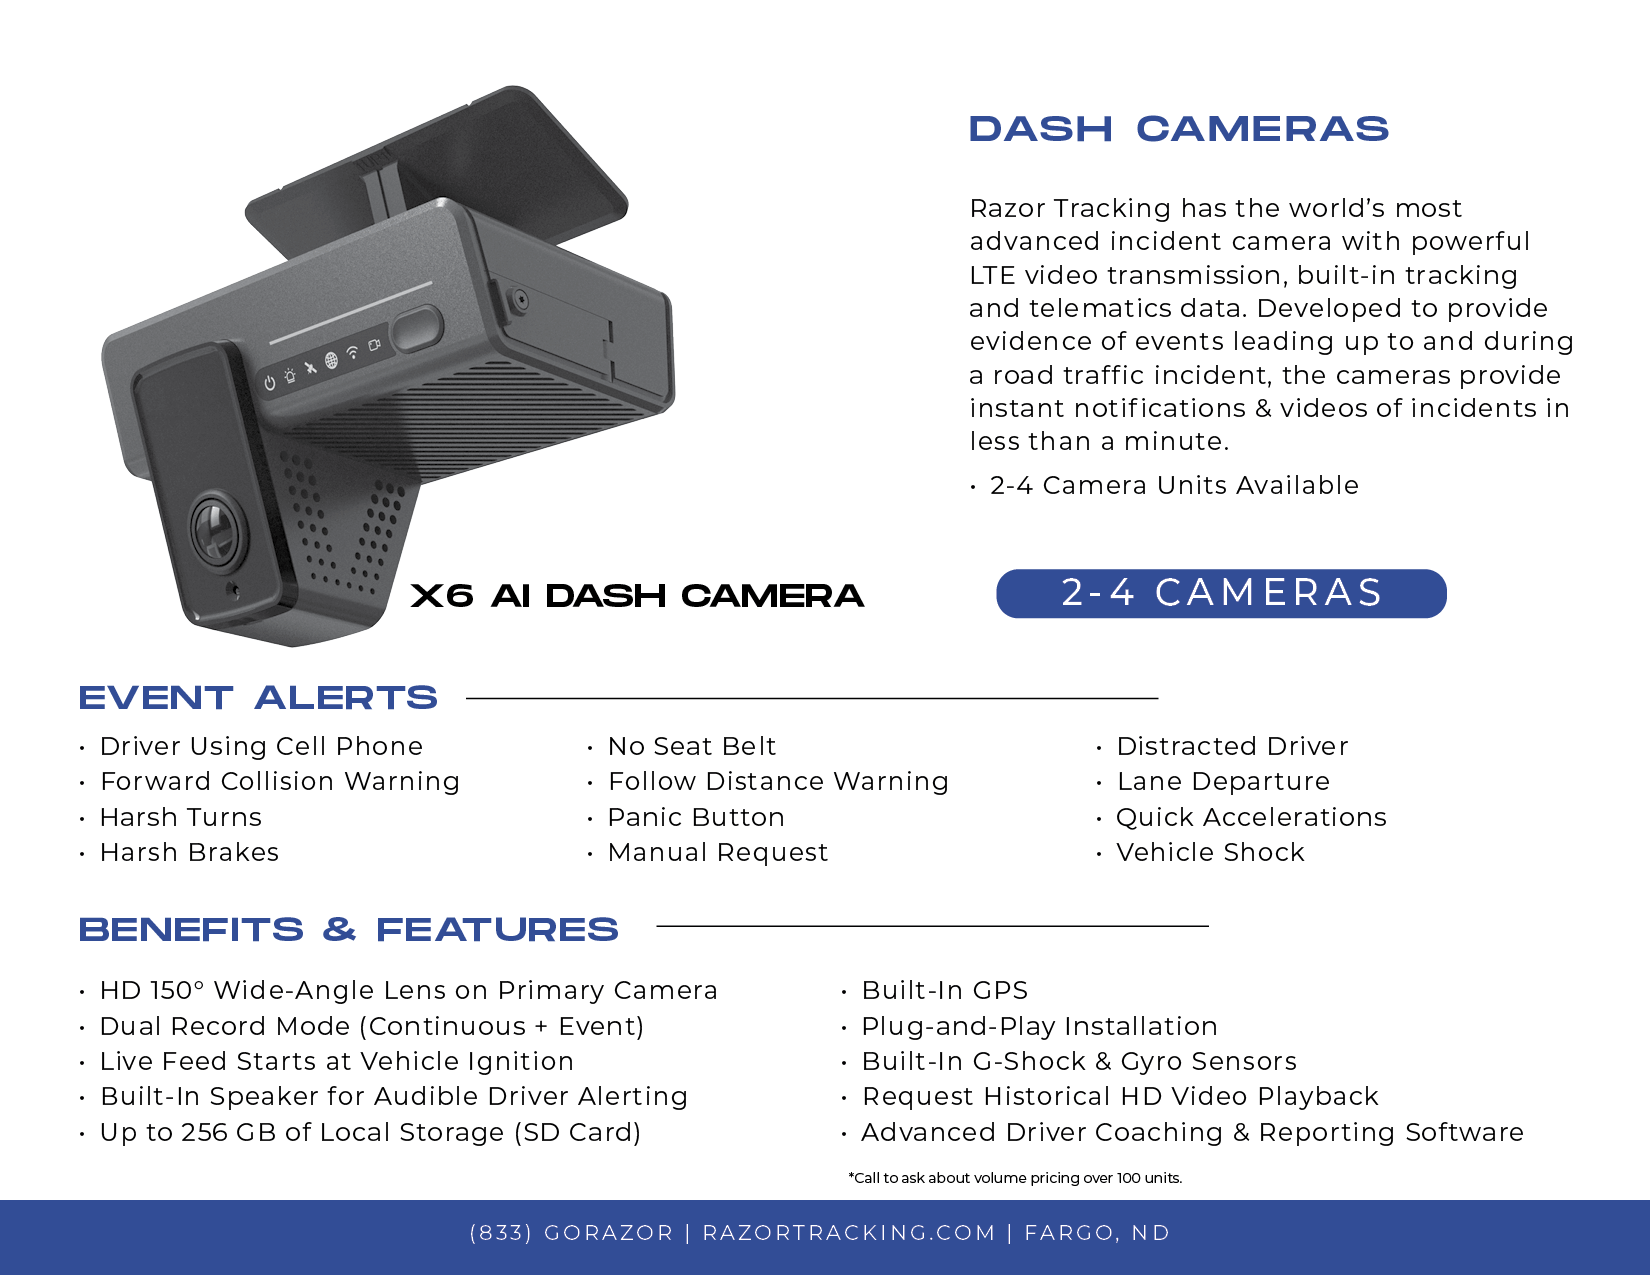 https://razortracking.com/wp-content/uploads/X6-AI-Dash-Cameras-Overview.png